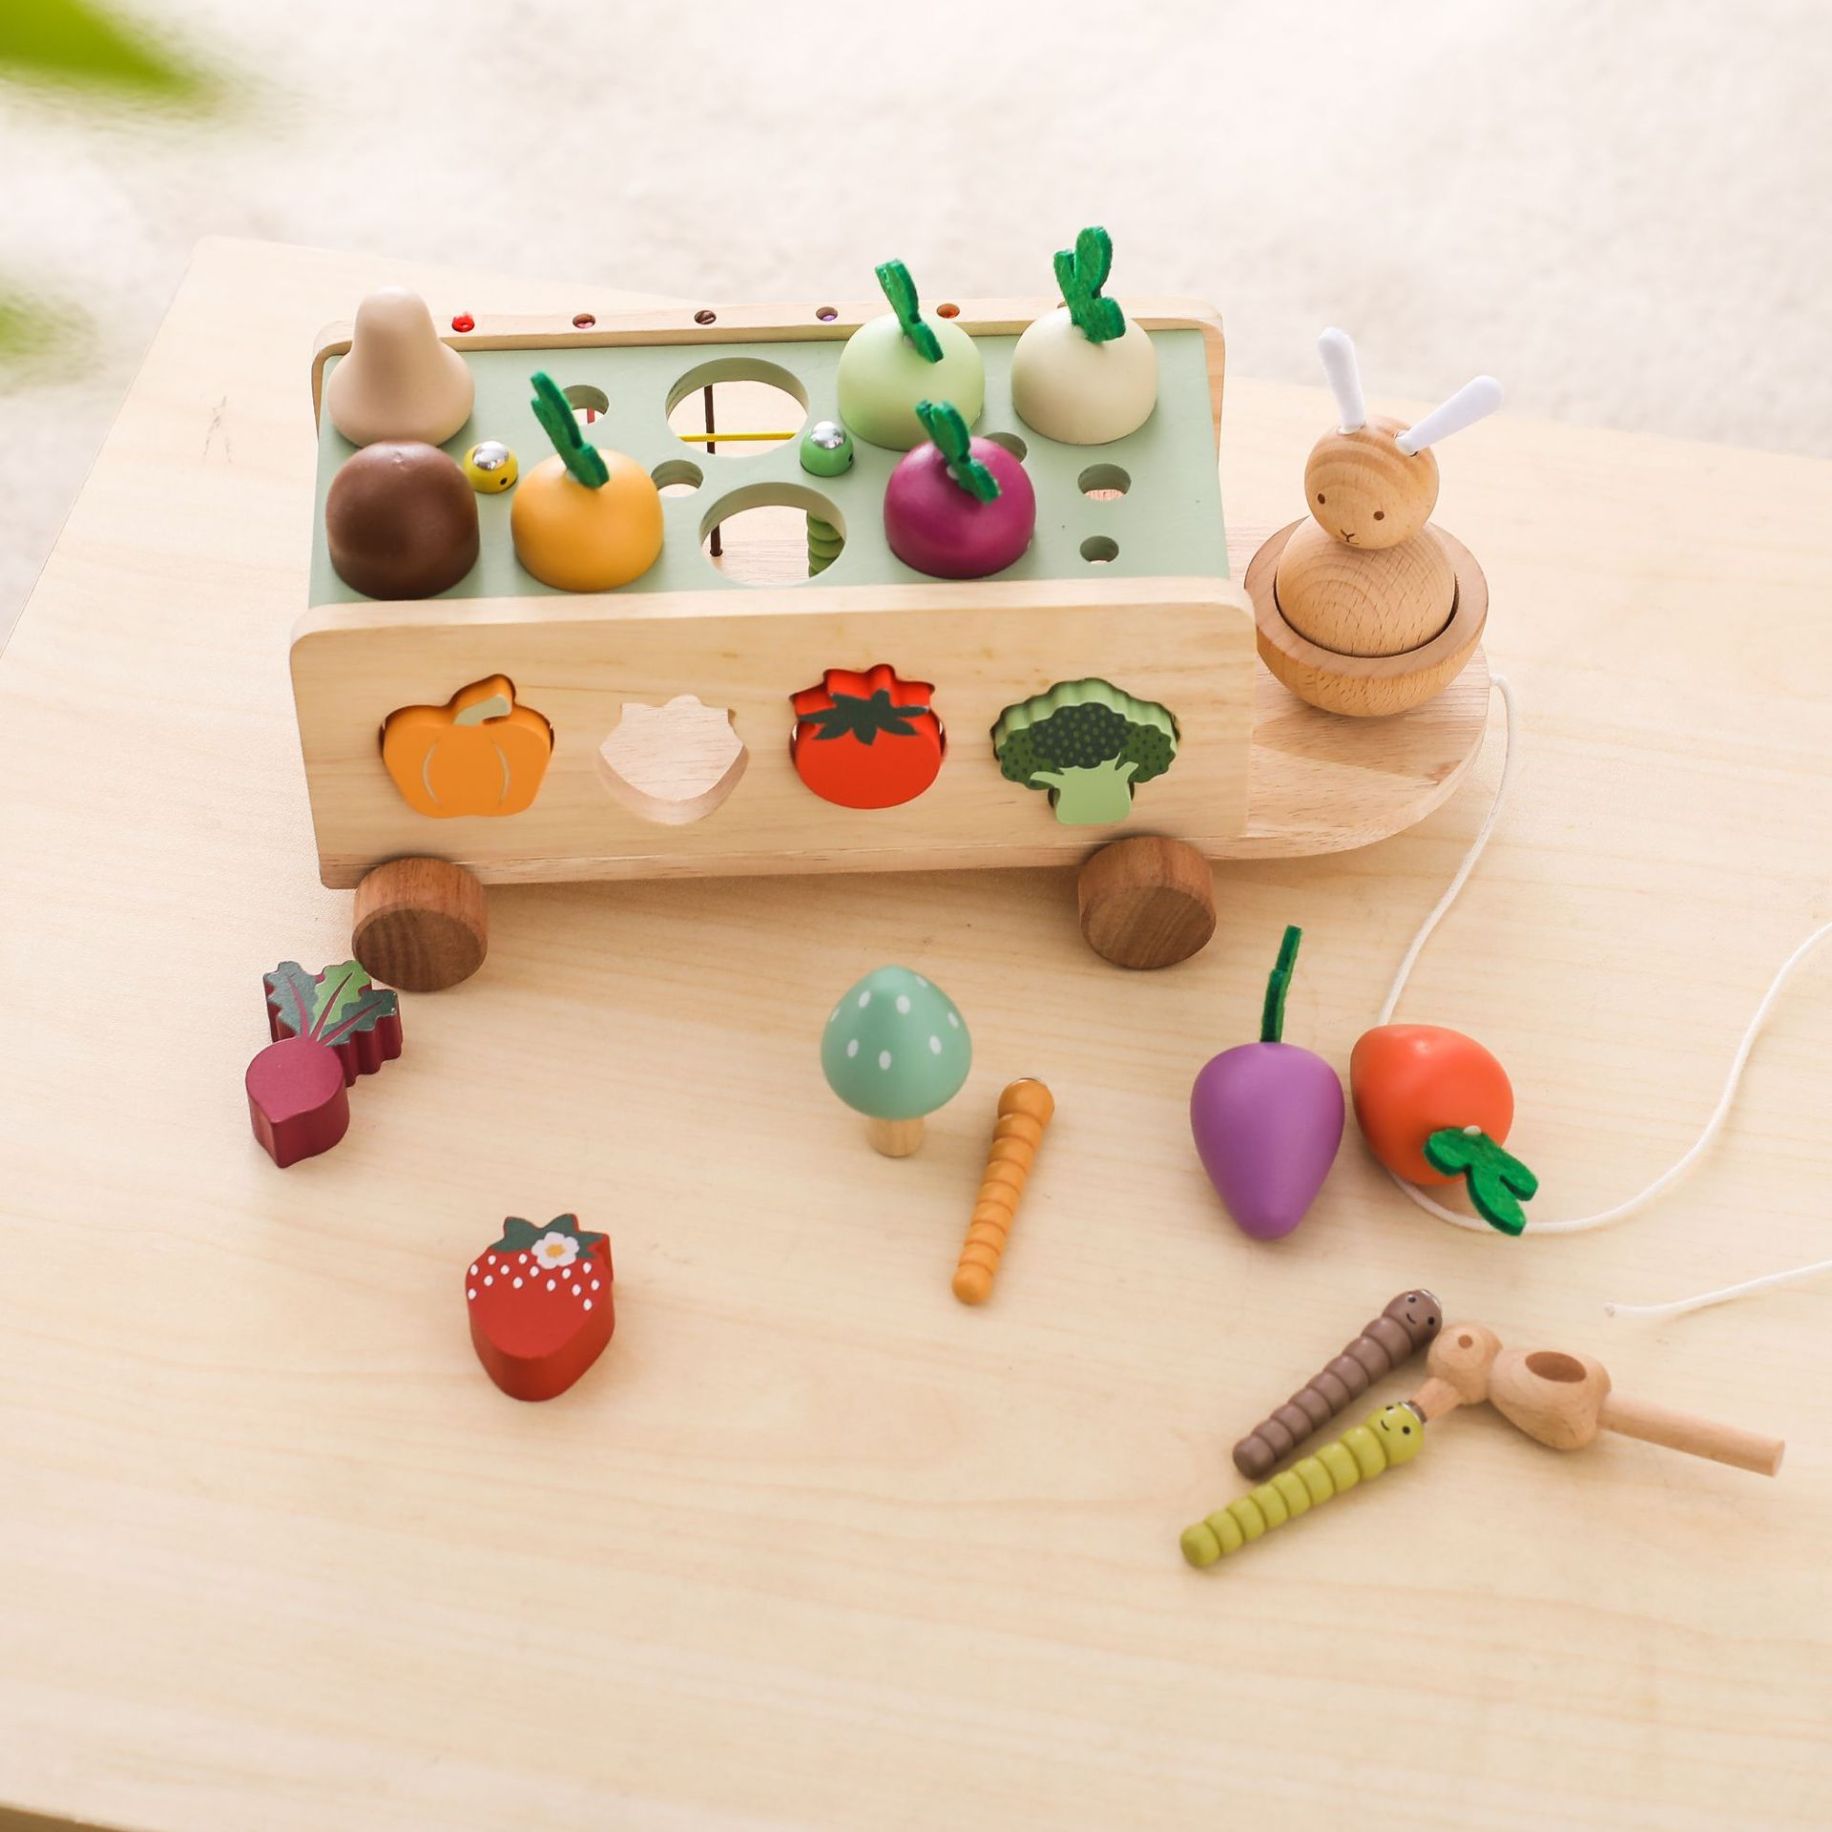 Montessori inspired wooden multi activity farm cart